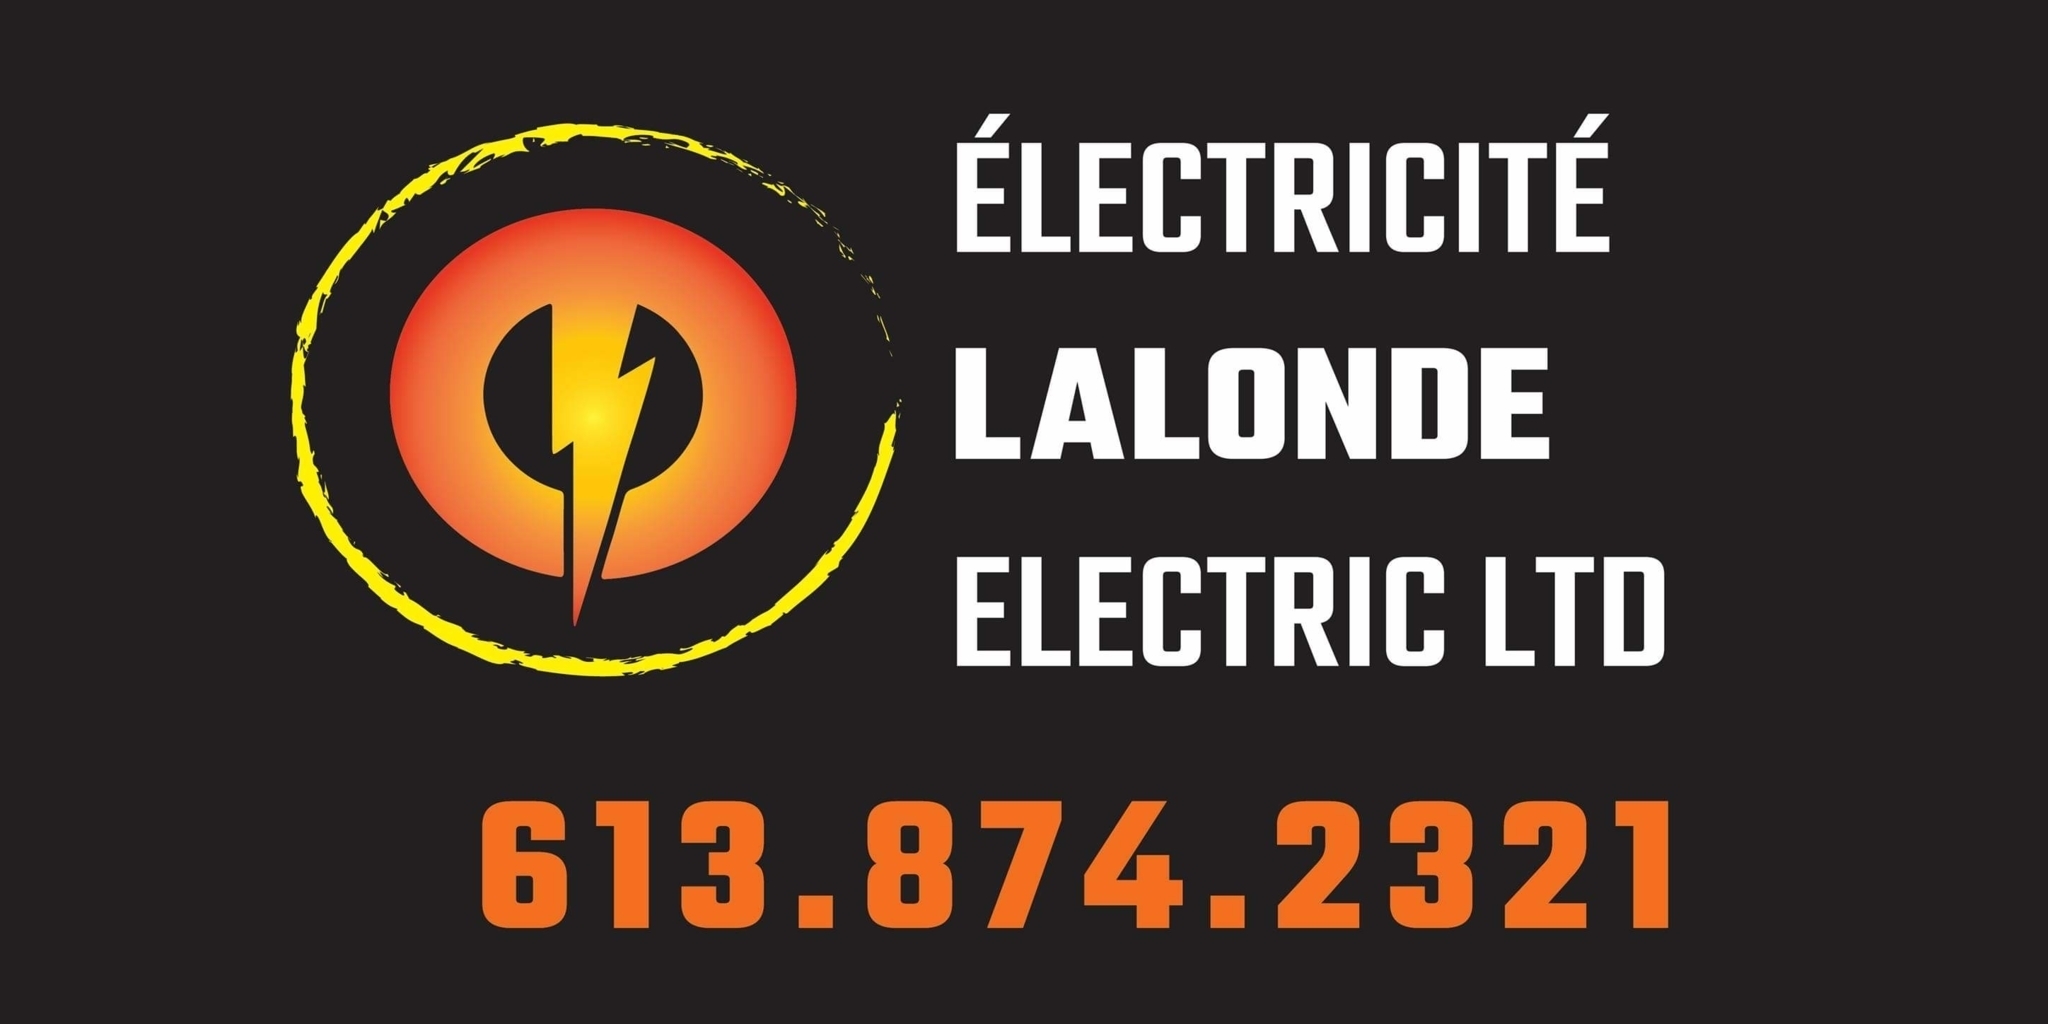 Electricite Lalonde Electric Ltd - Electricians & Electrical Contractors